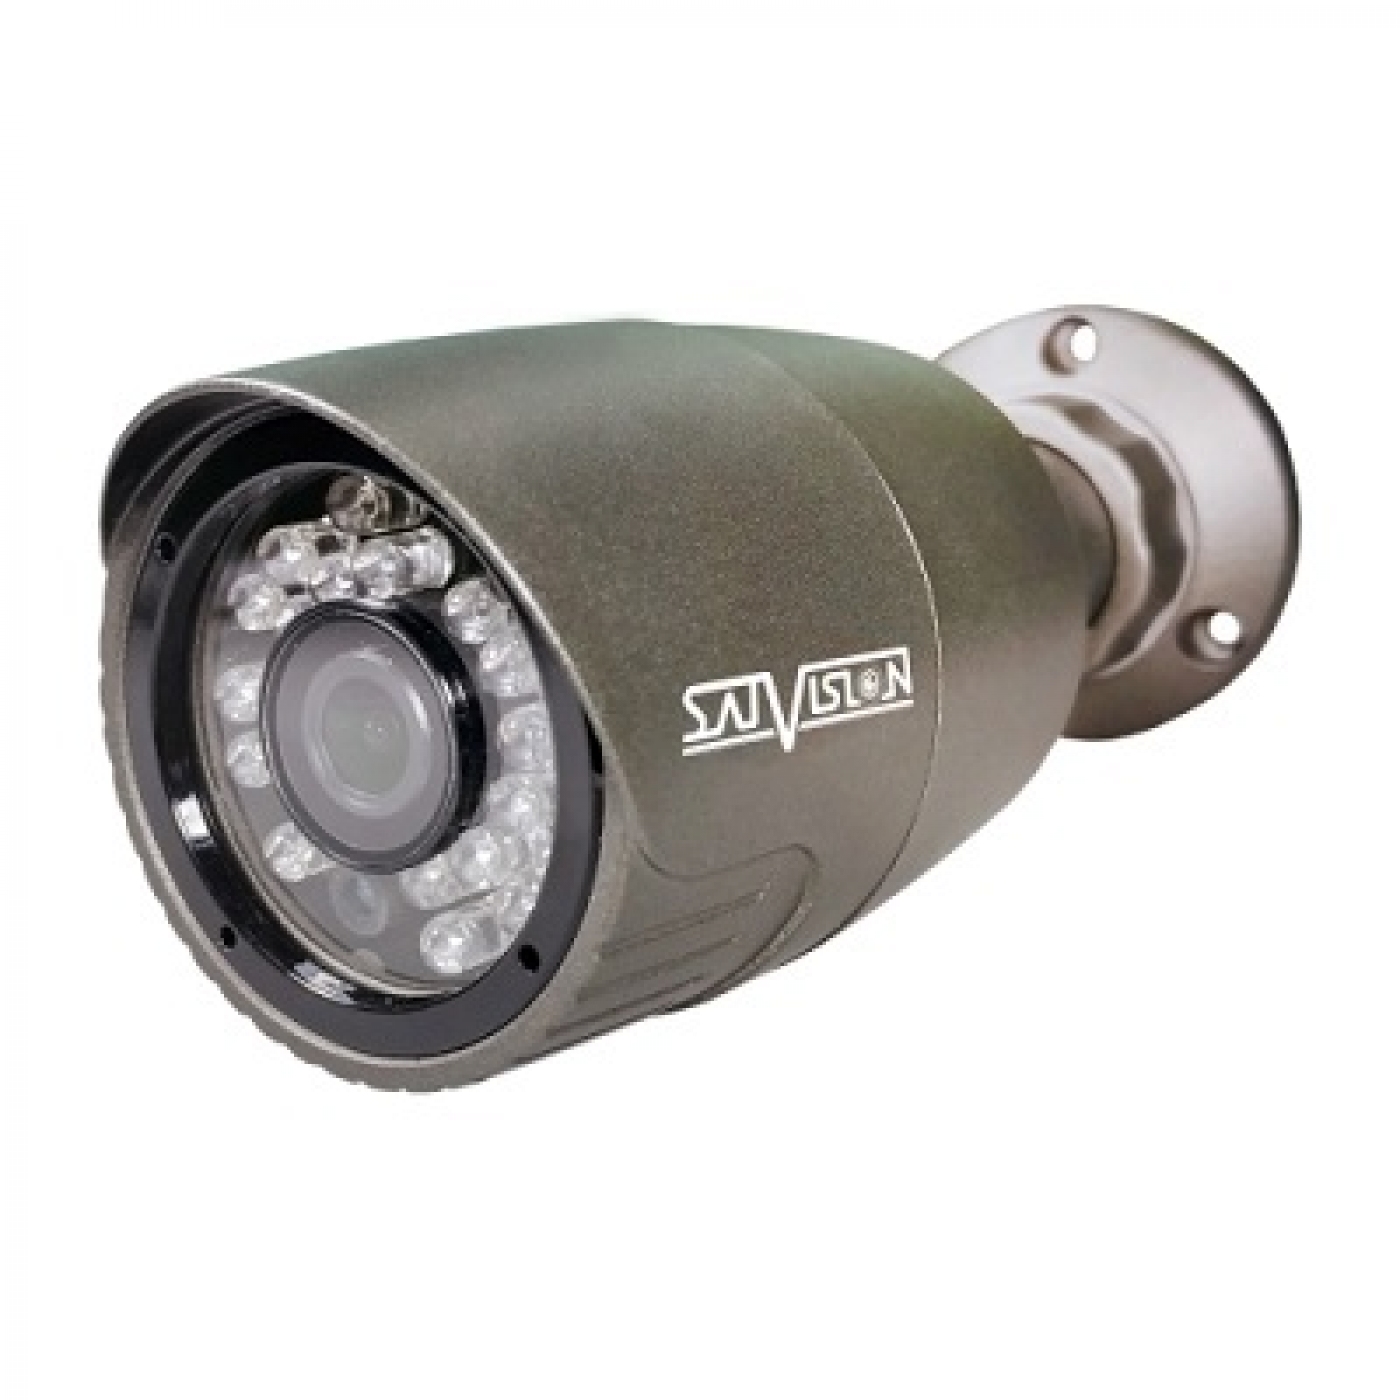 SVC-S195 2.8 - Видеокамера SATVISION  OSD Version 2.0